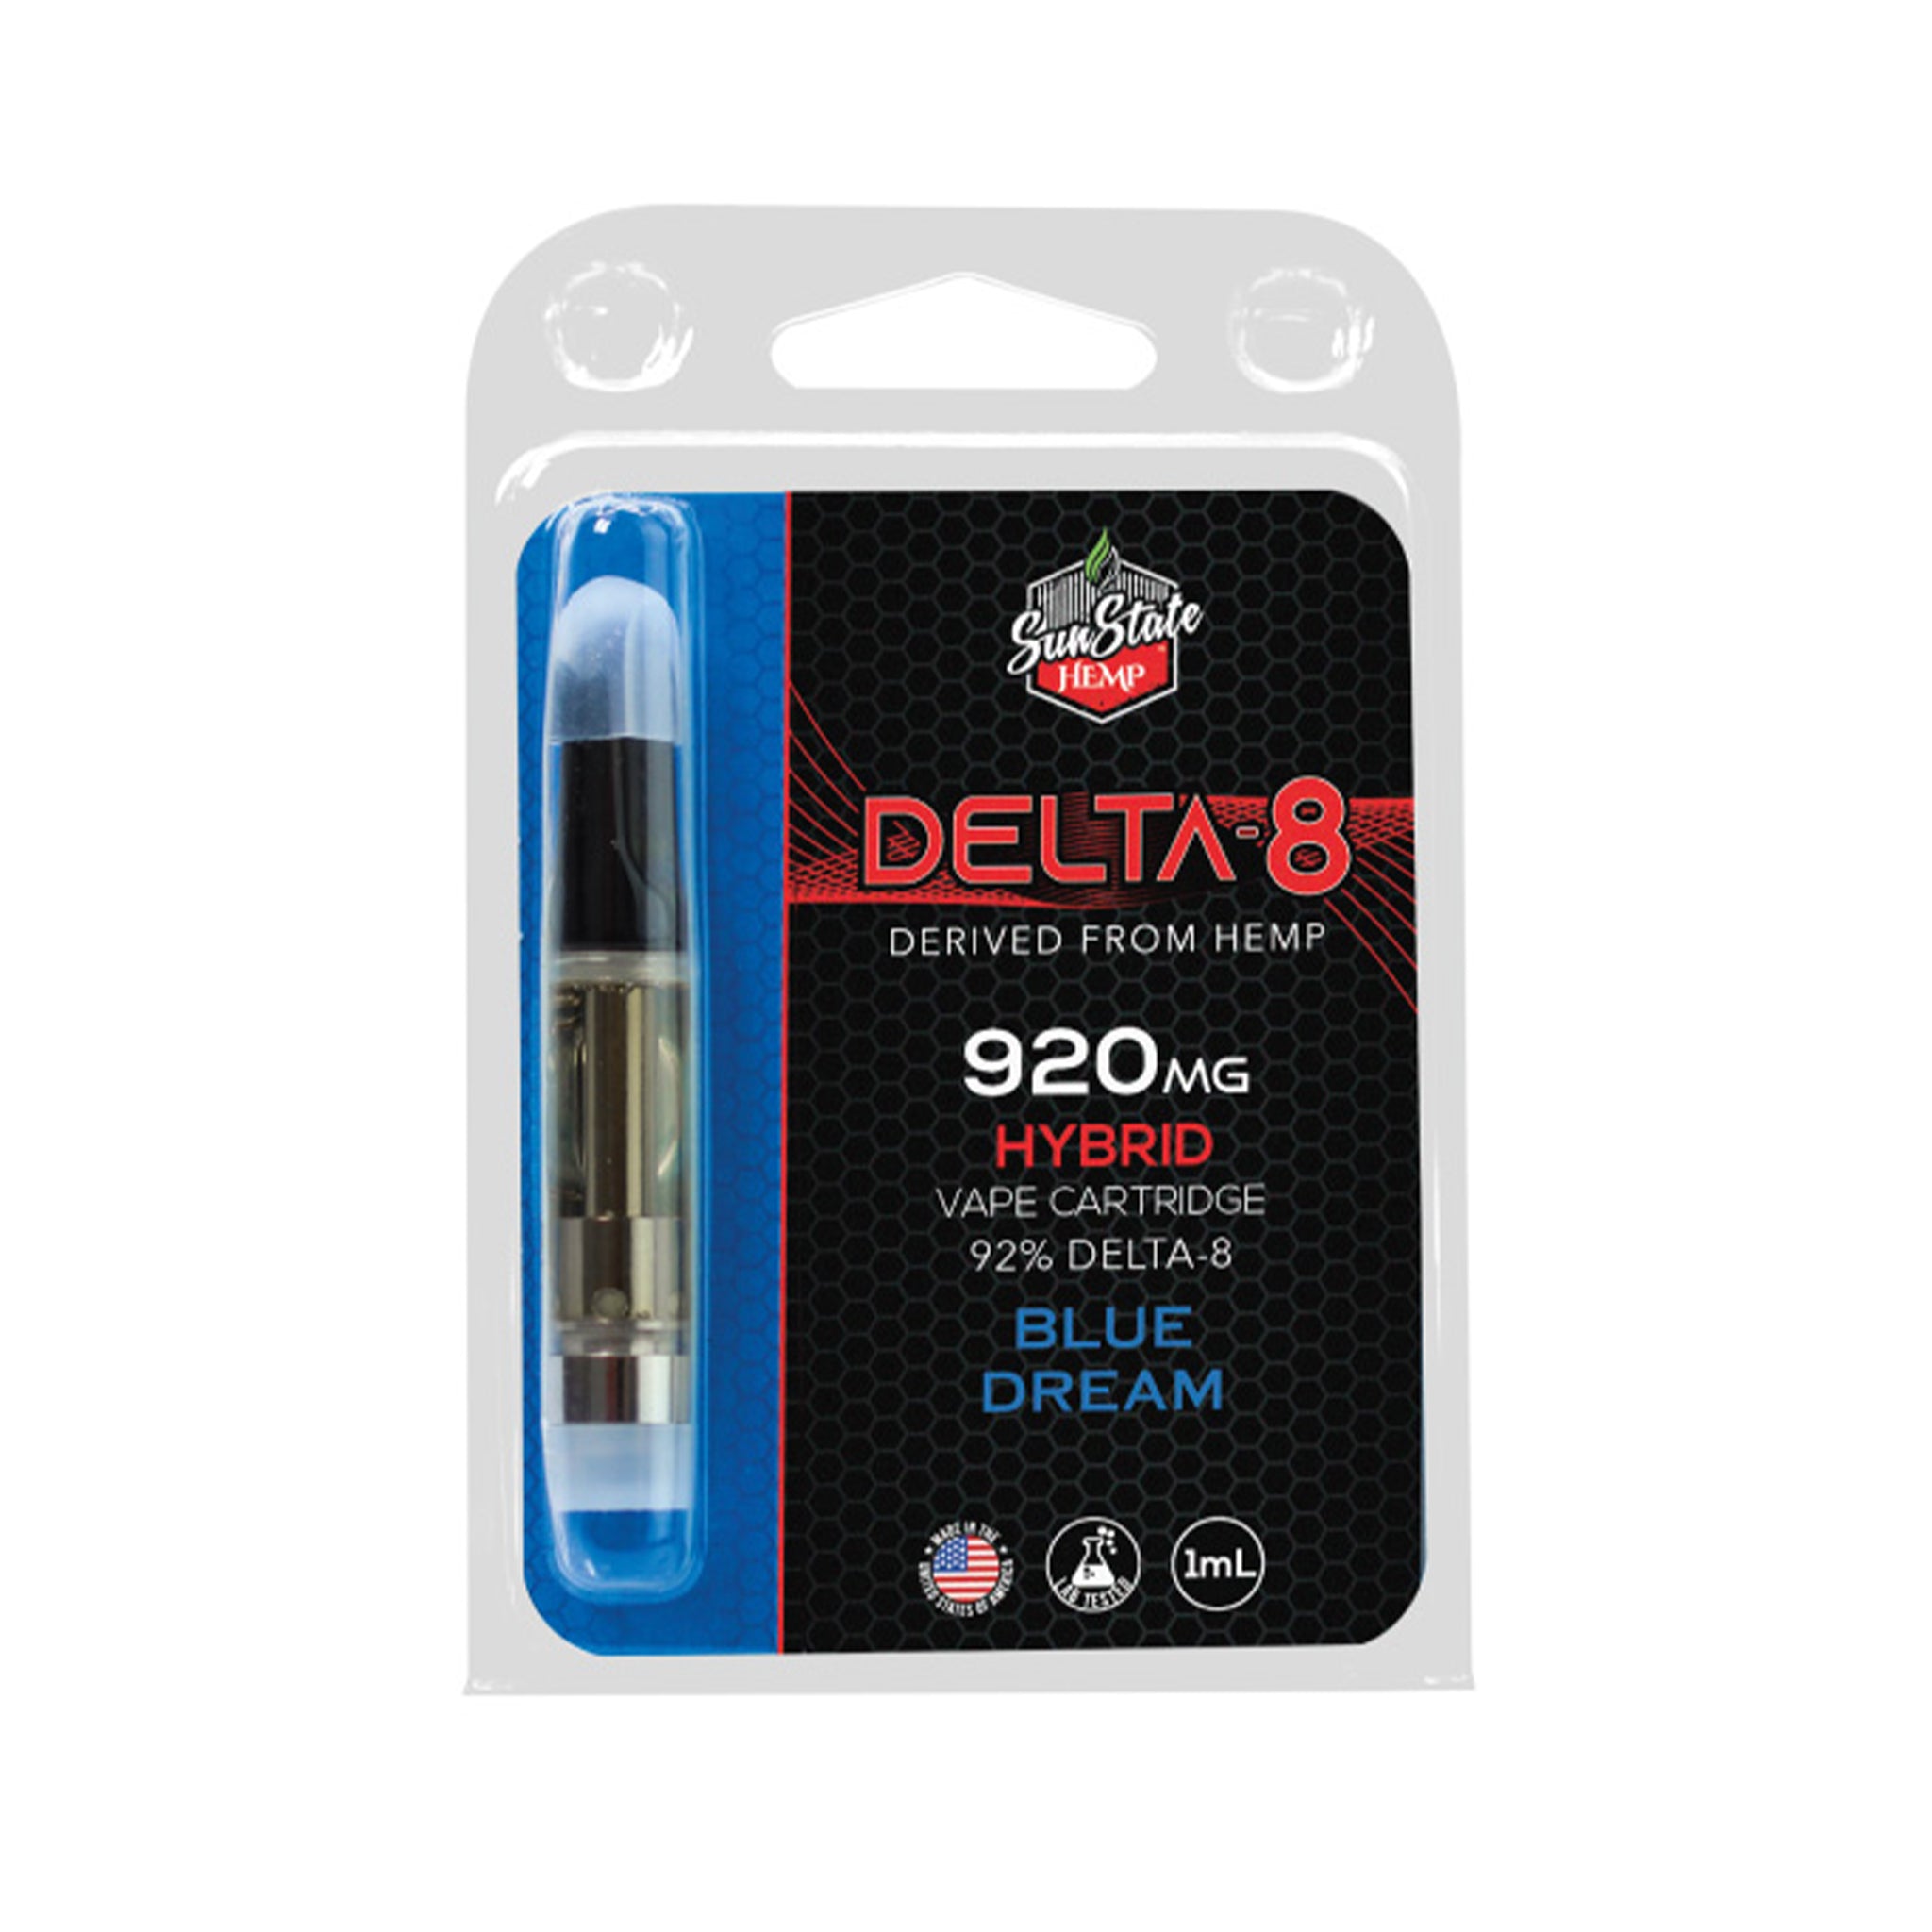 Delta-8 Derived From Hemp Hybrid Vape Cartridge | Blue Dream | 920mg